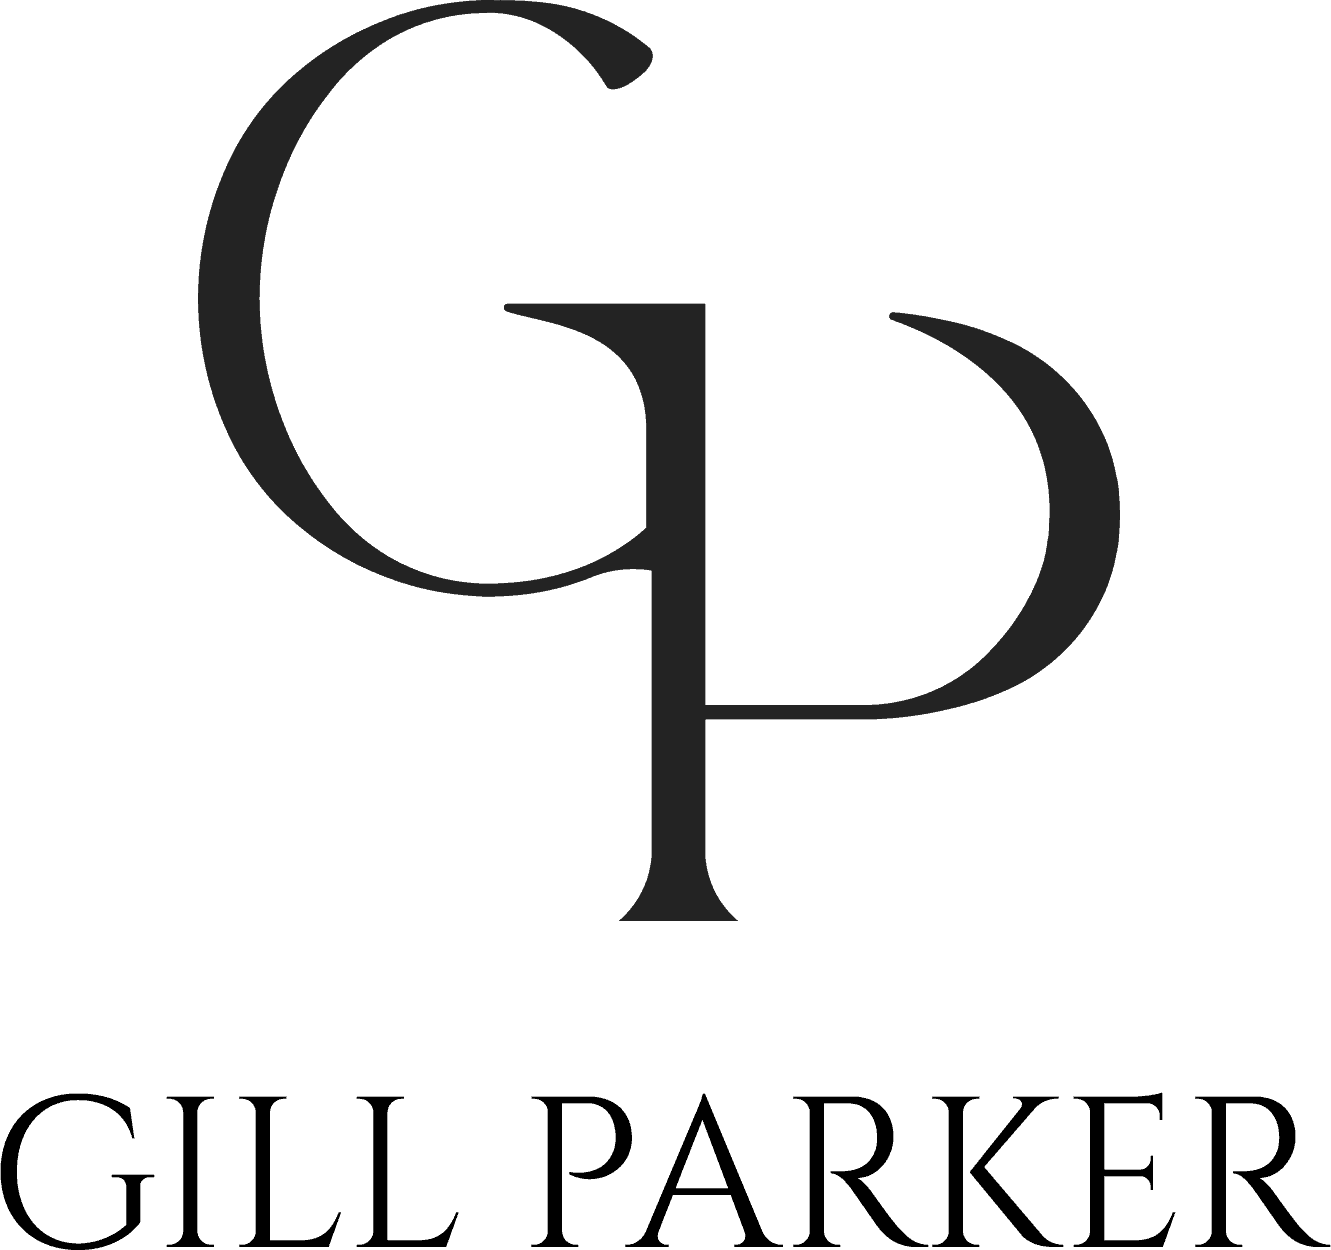 Gill Parker - Animal Sculpture